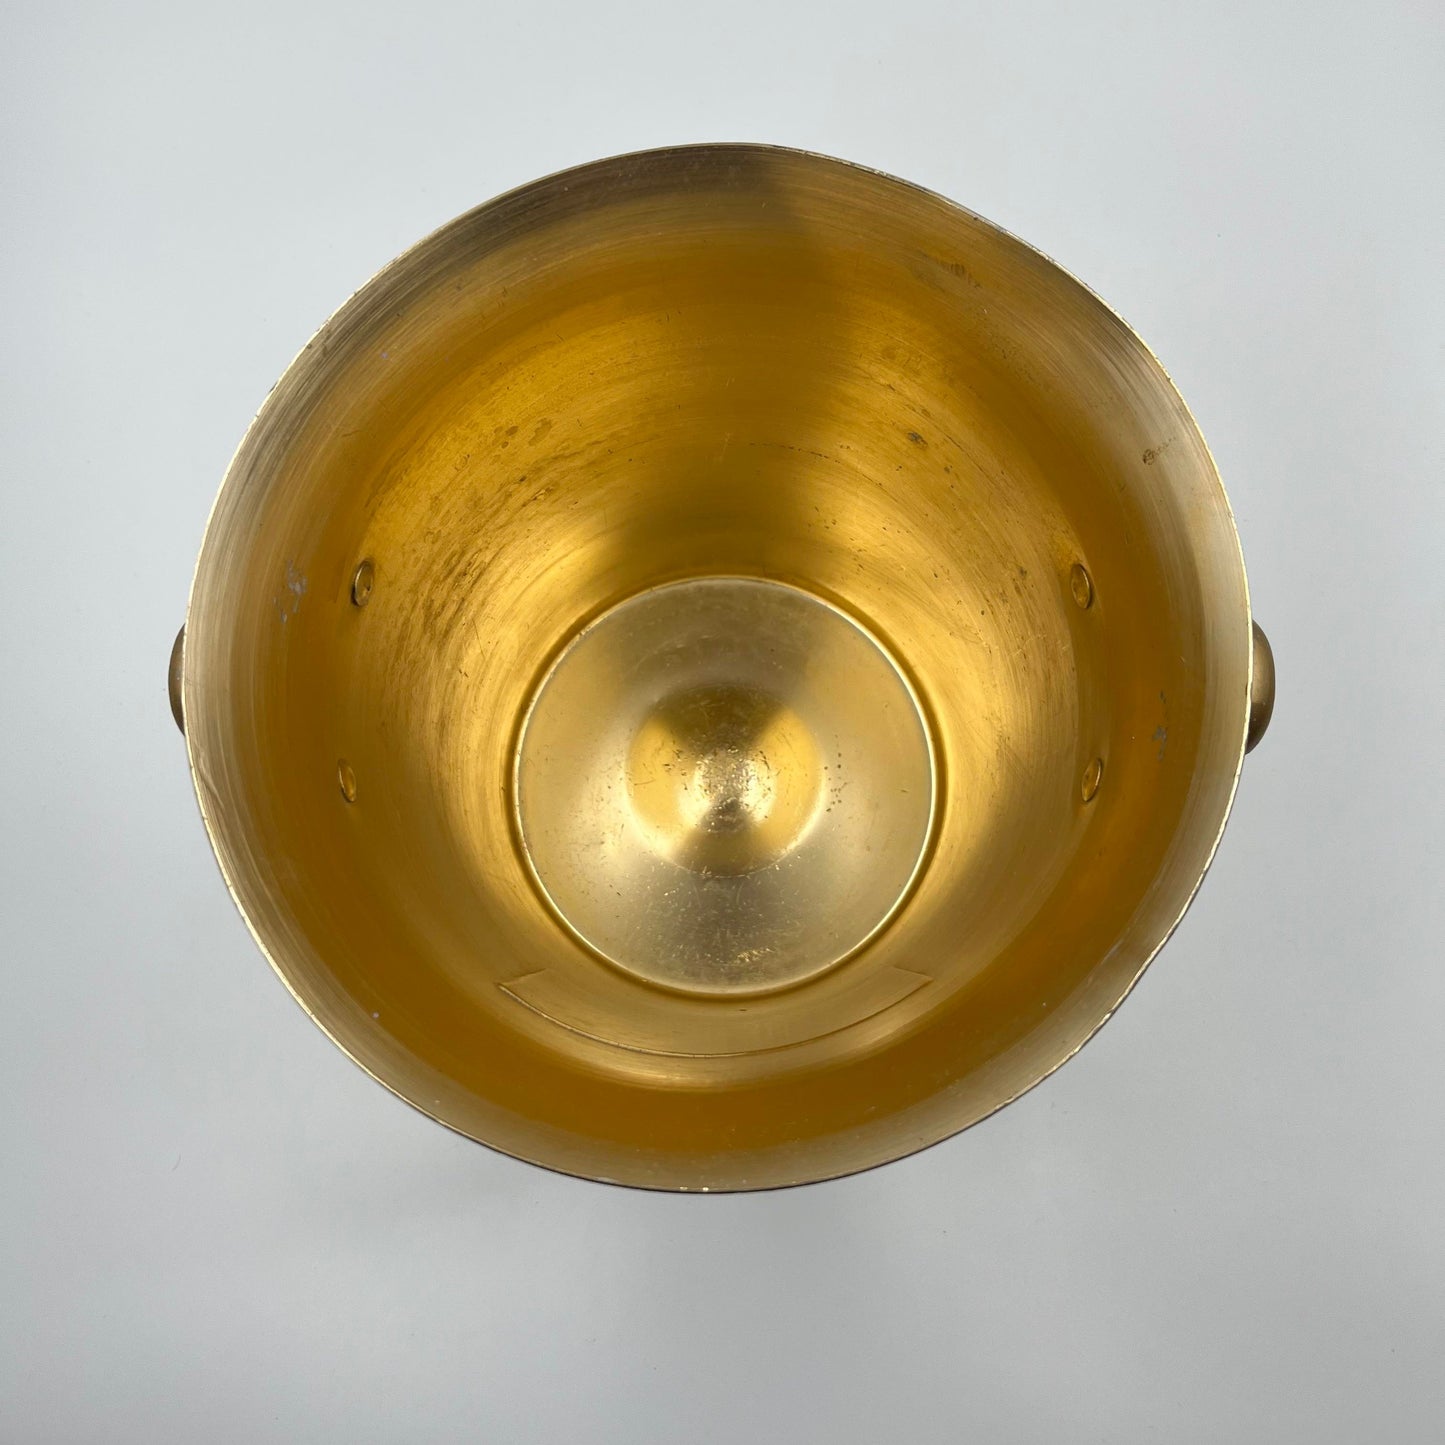 Jahrgang Louis Roederer Champagnerkübel